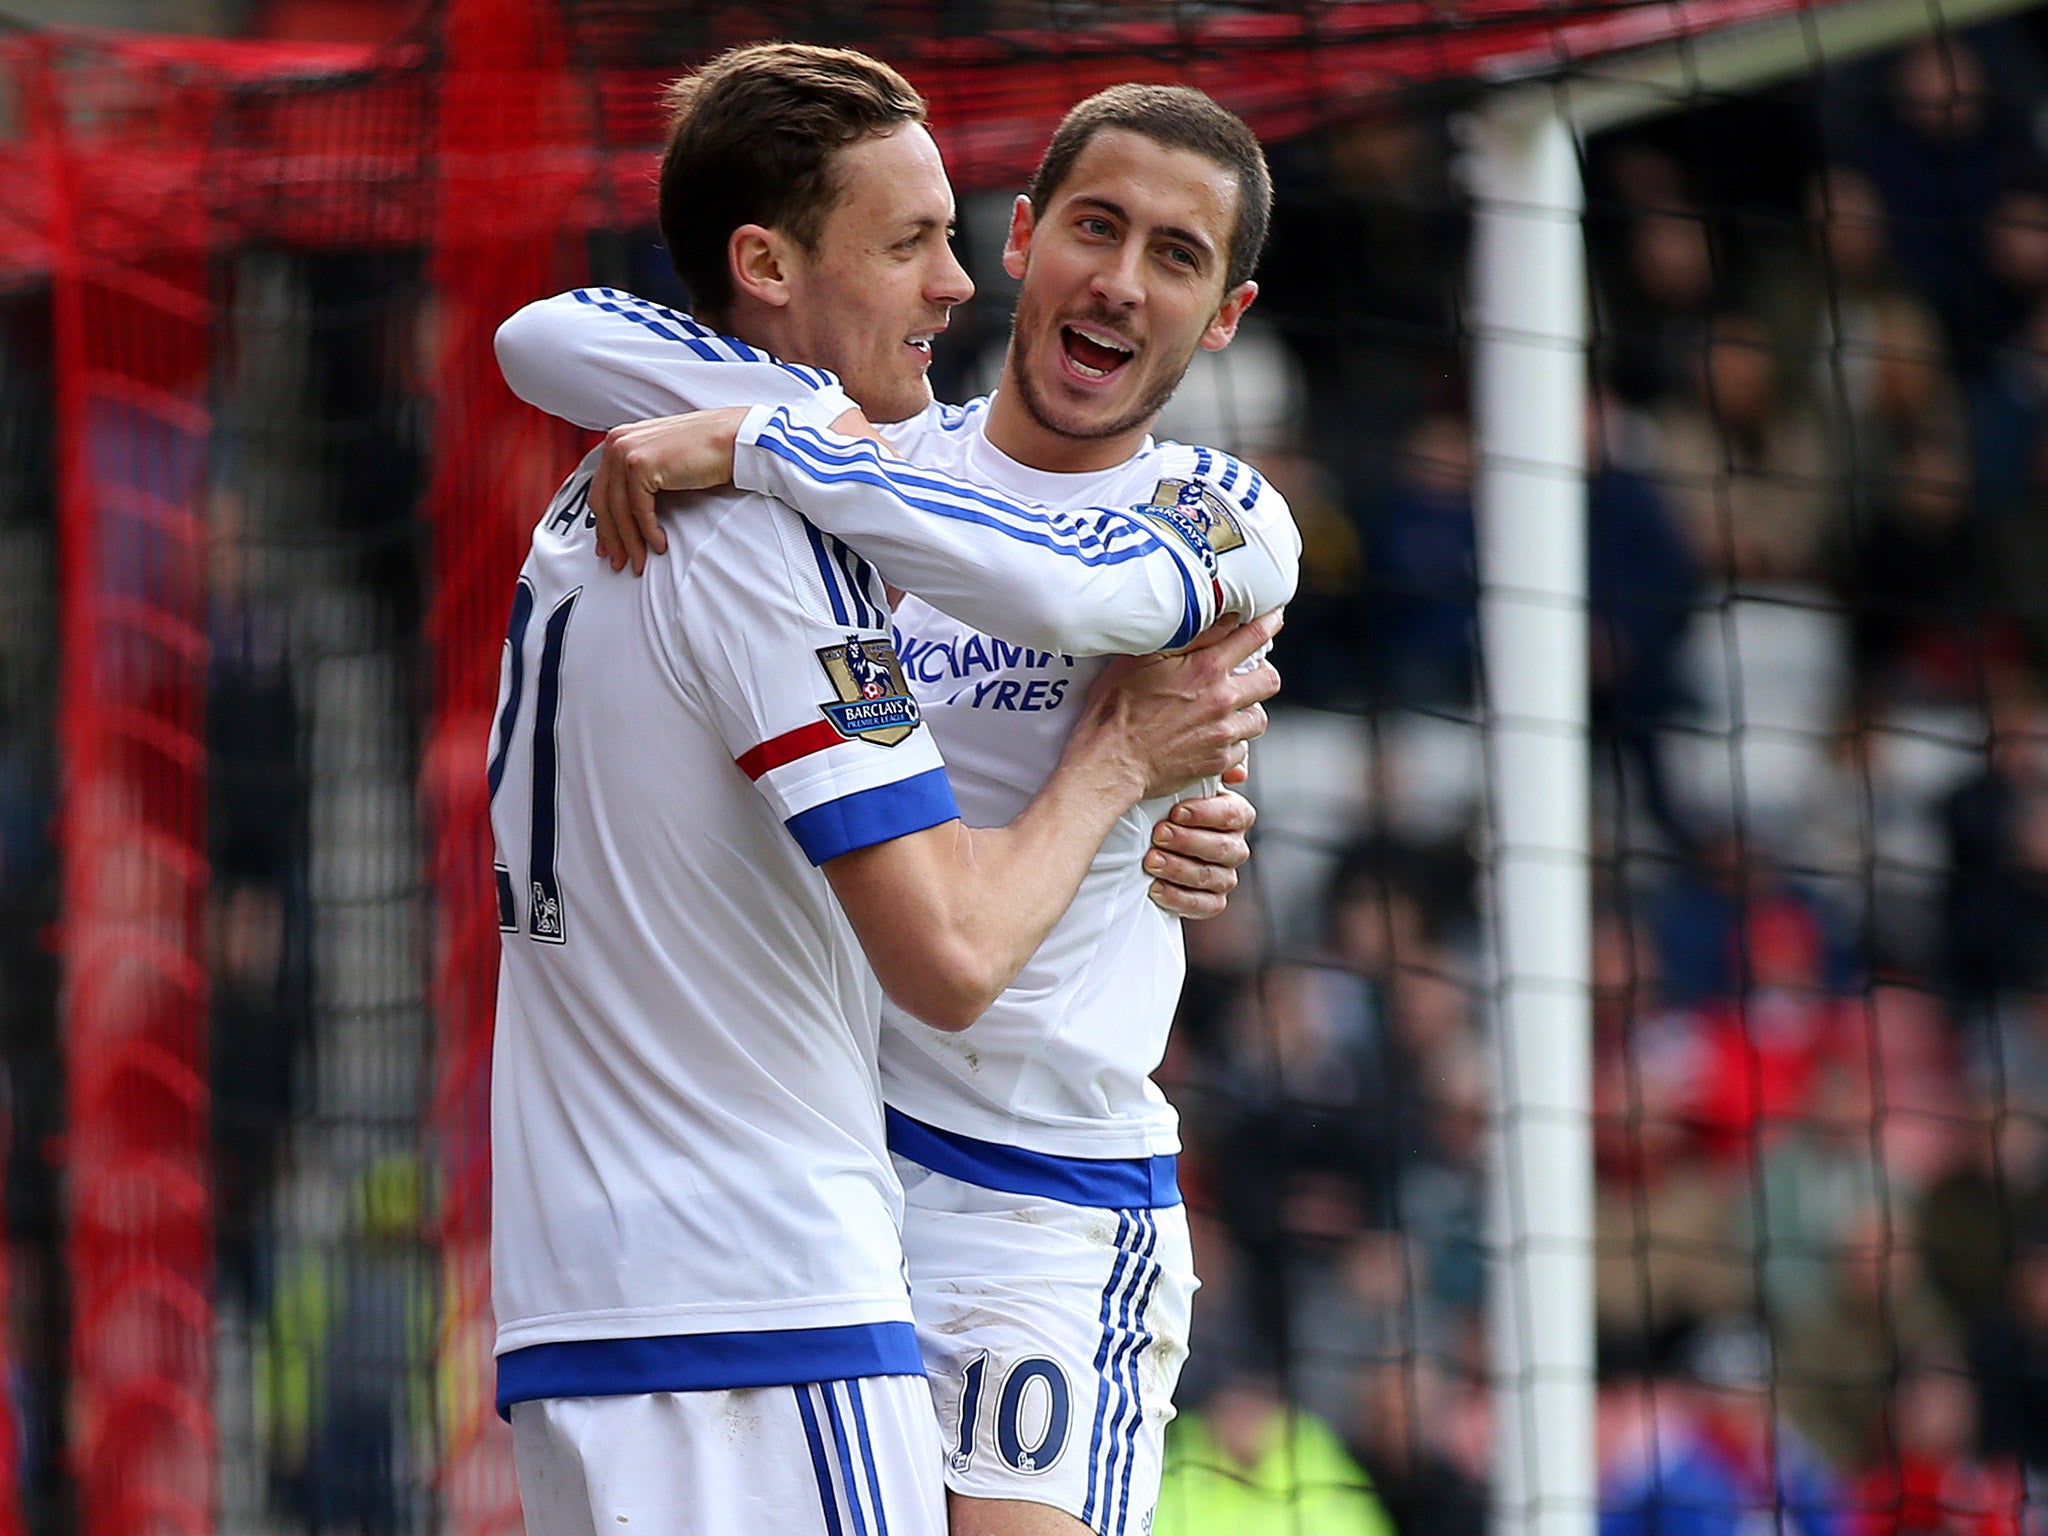 Eden Hazard celebrates after scoring for Chelsea against Bournemouth